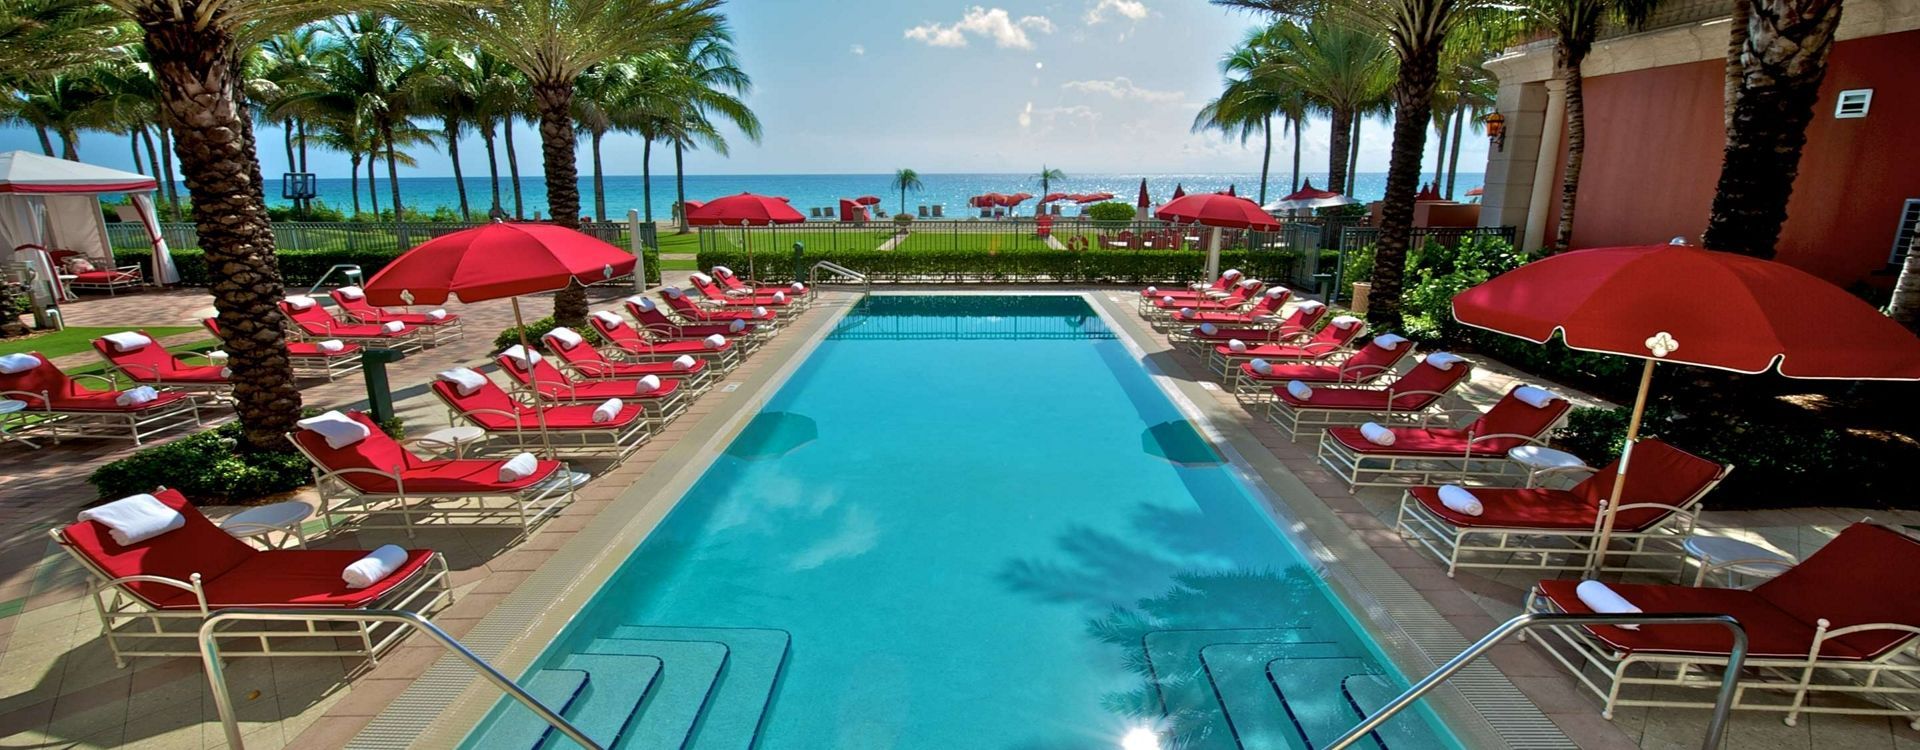 Acquialina Resort Spa on the Beach—Florida 3.jpeg